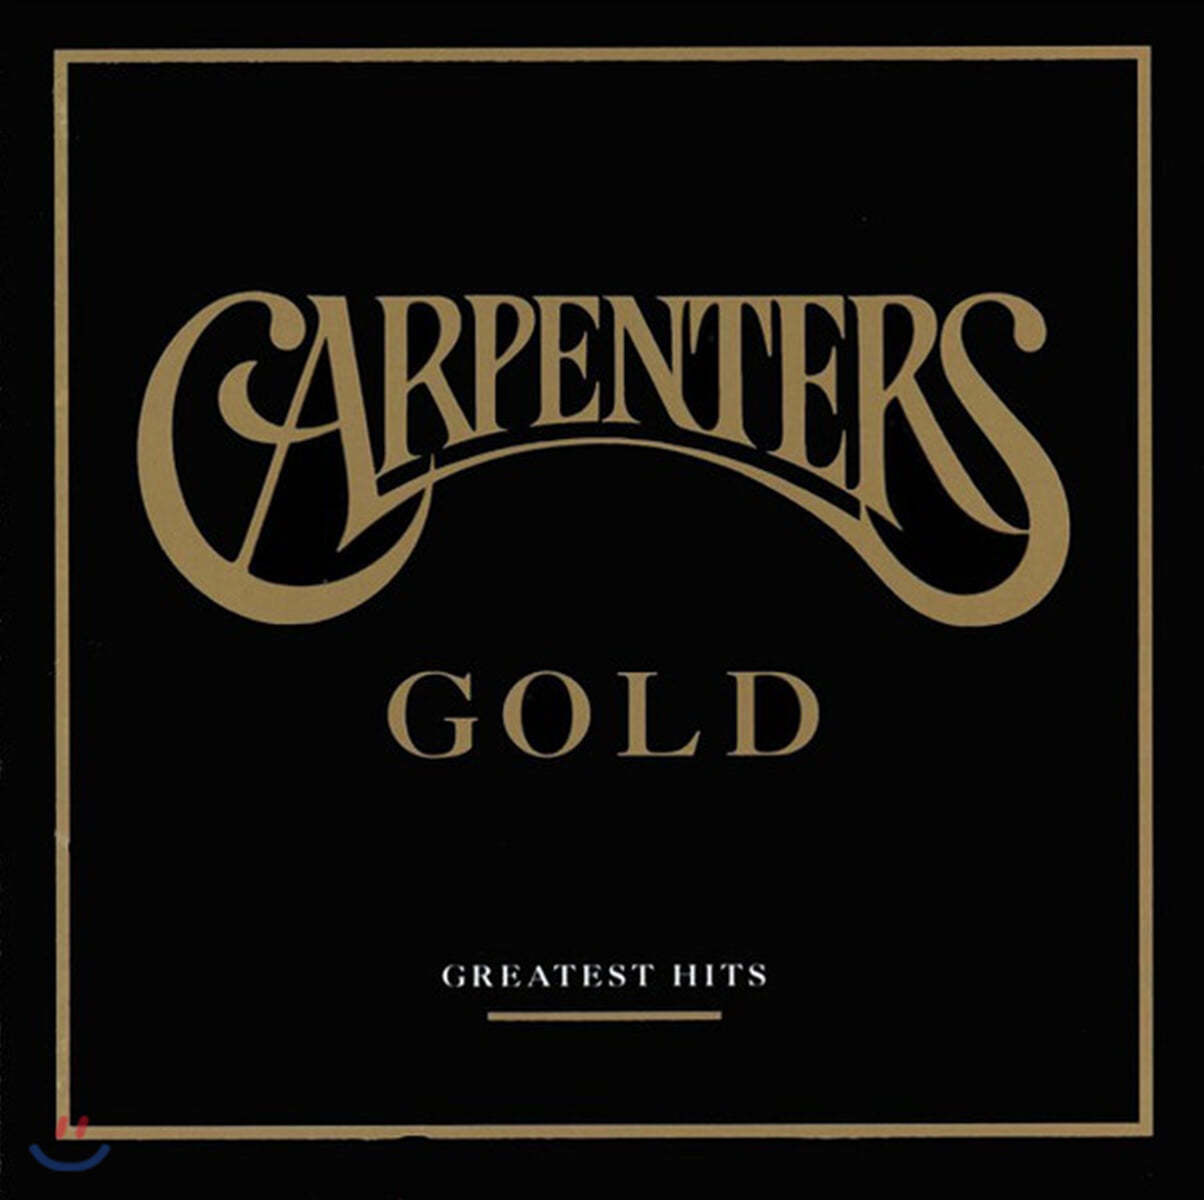 Carpenters (카펜터스) - Gold Greatest Hits